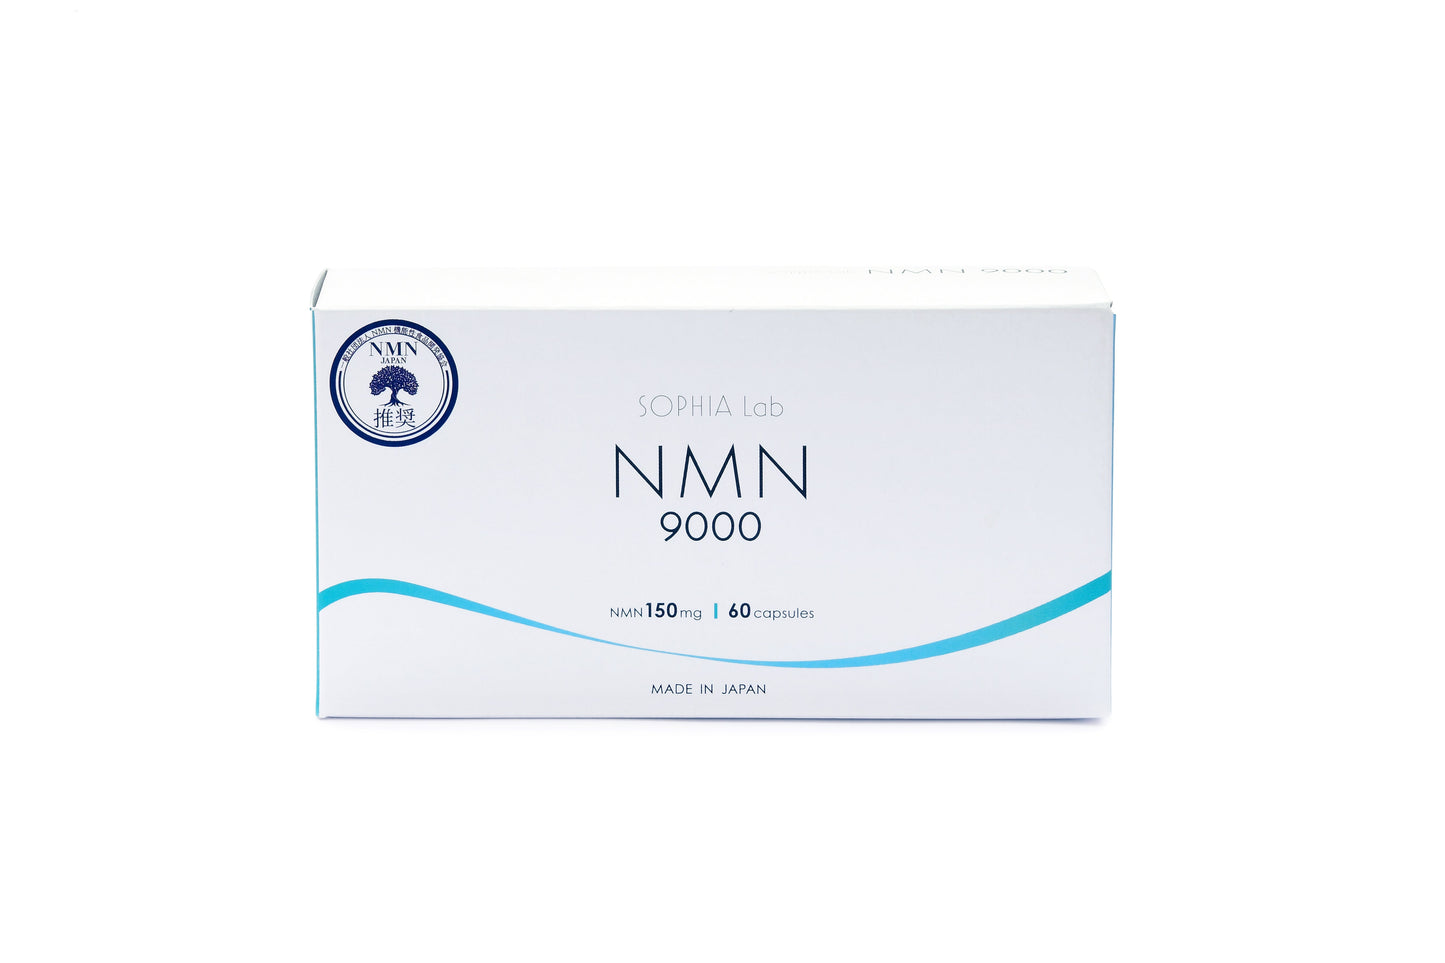 NMN9000×3 | お得な大特価キャンペーン